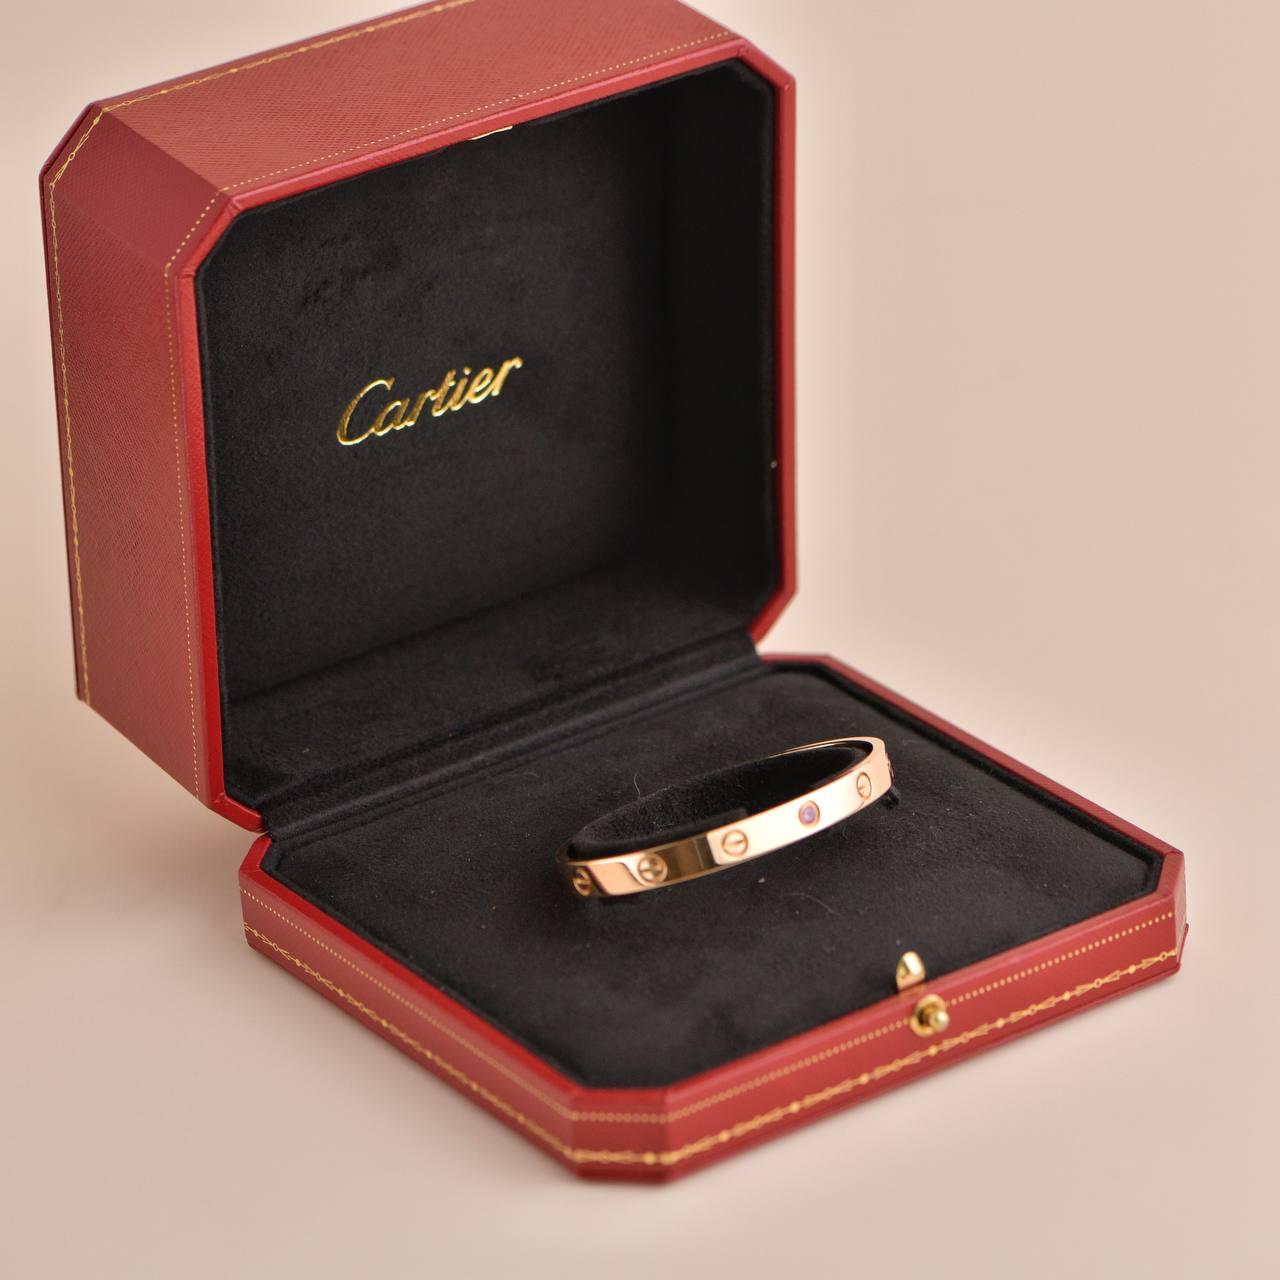 SKU: AT-1722
Brand:  Cartier
Model:  B6030017
Date:  Approx. 2011
Serial No. RI****
_____________________________________________________________
Size 17
Metal:  18K Rose Gold
Stone:  1